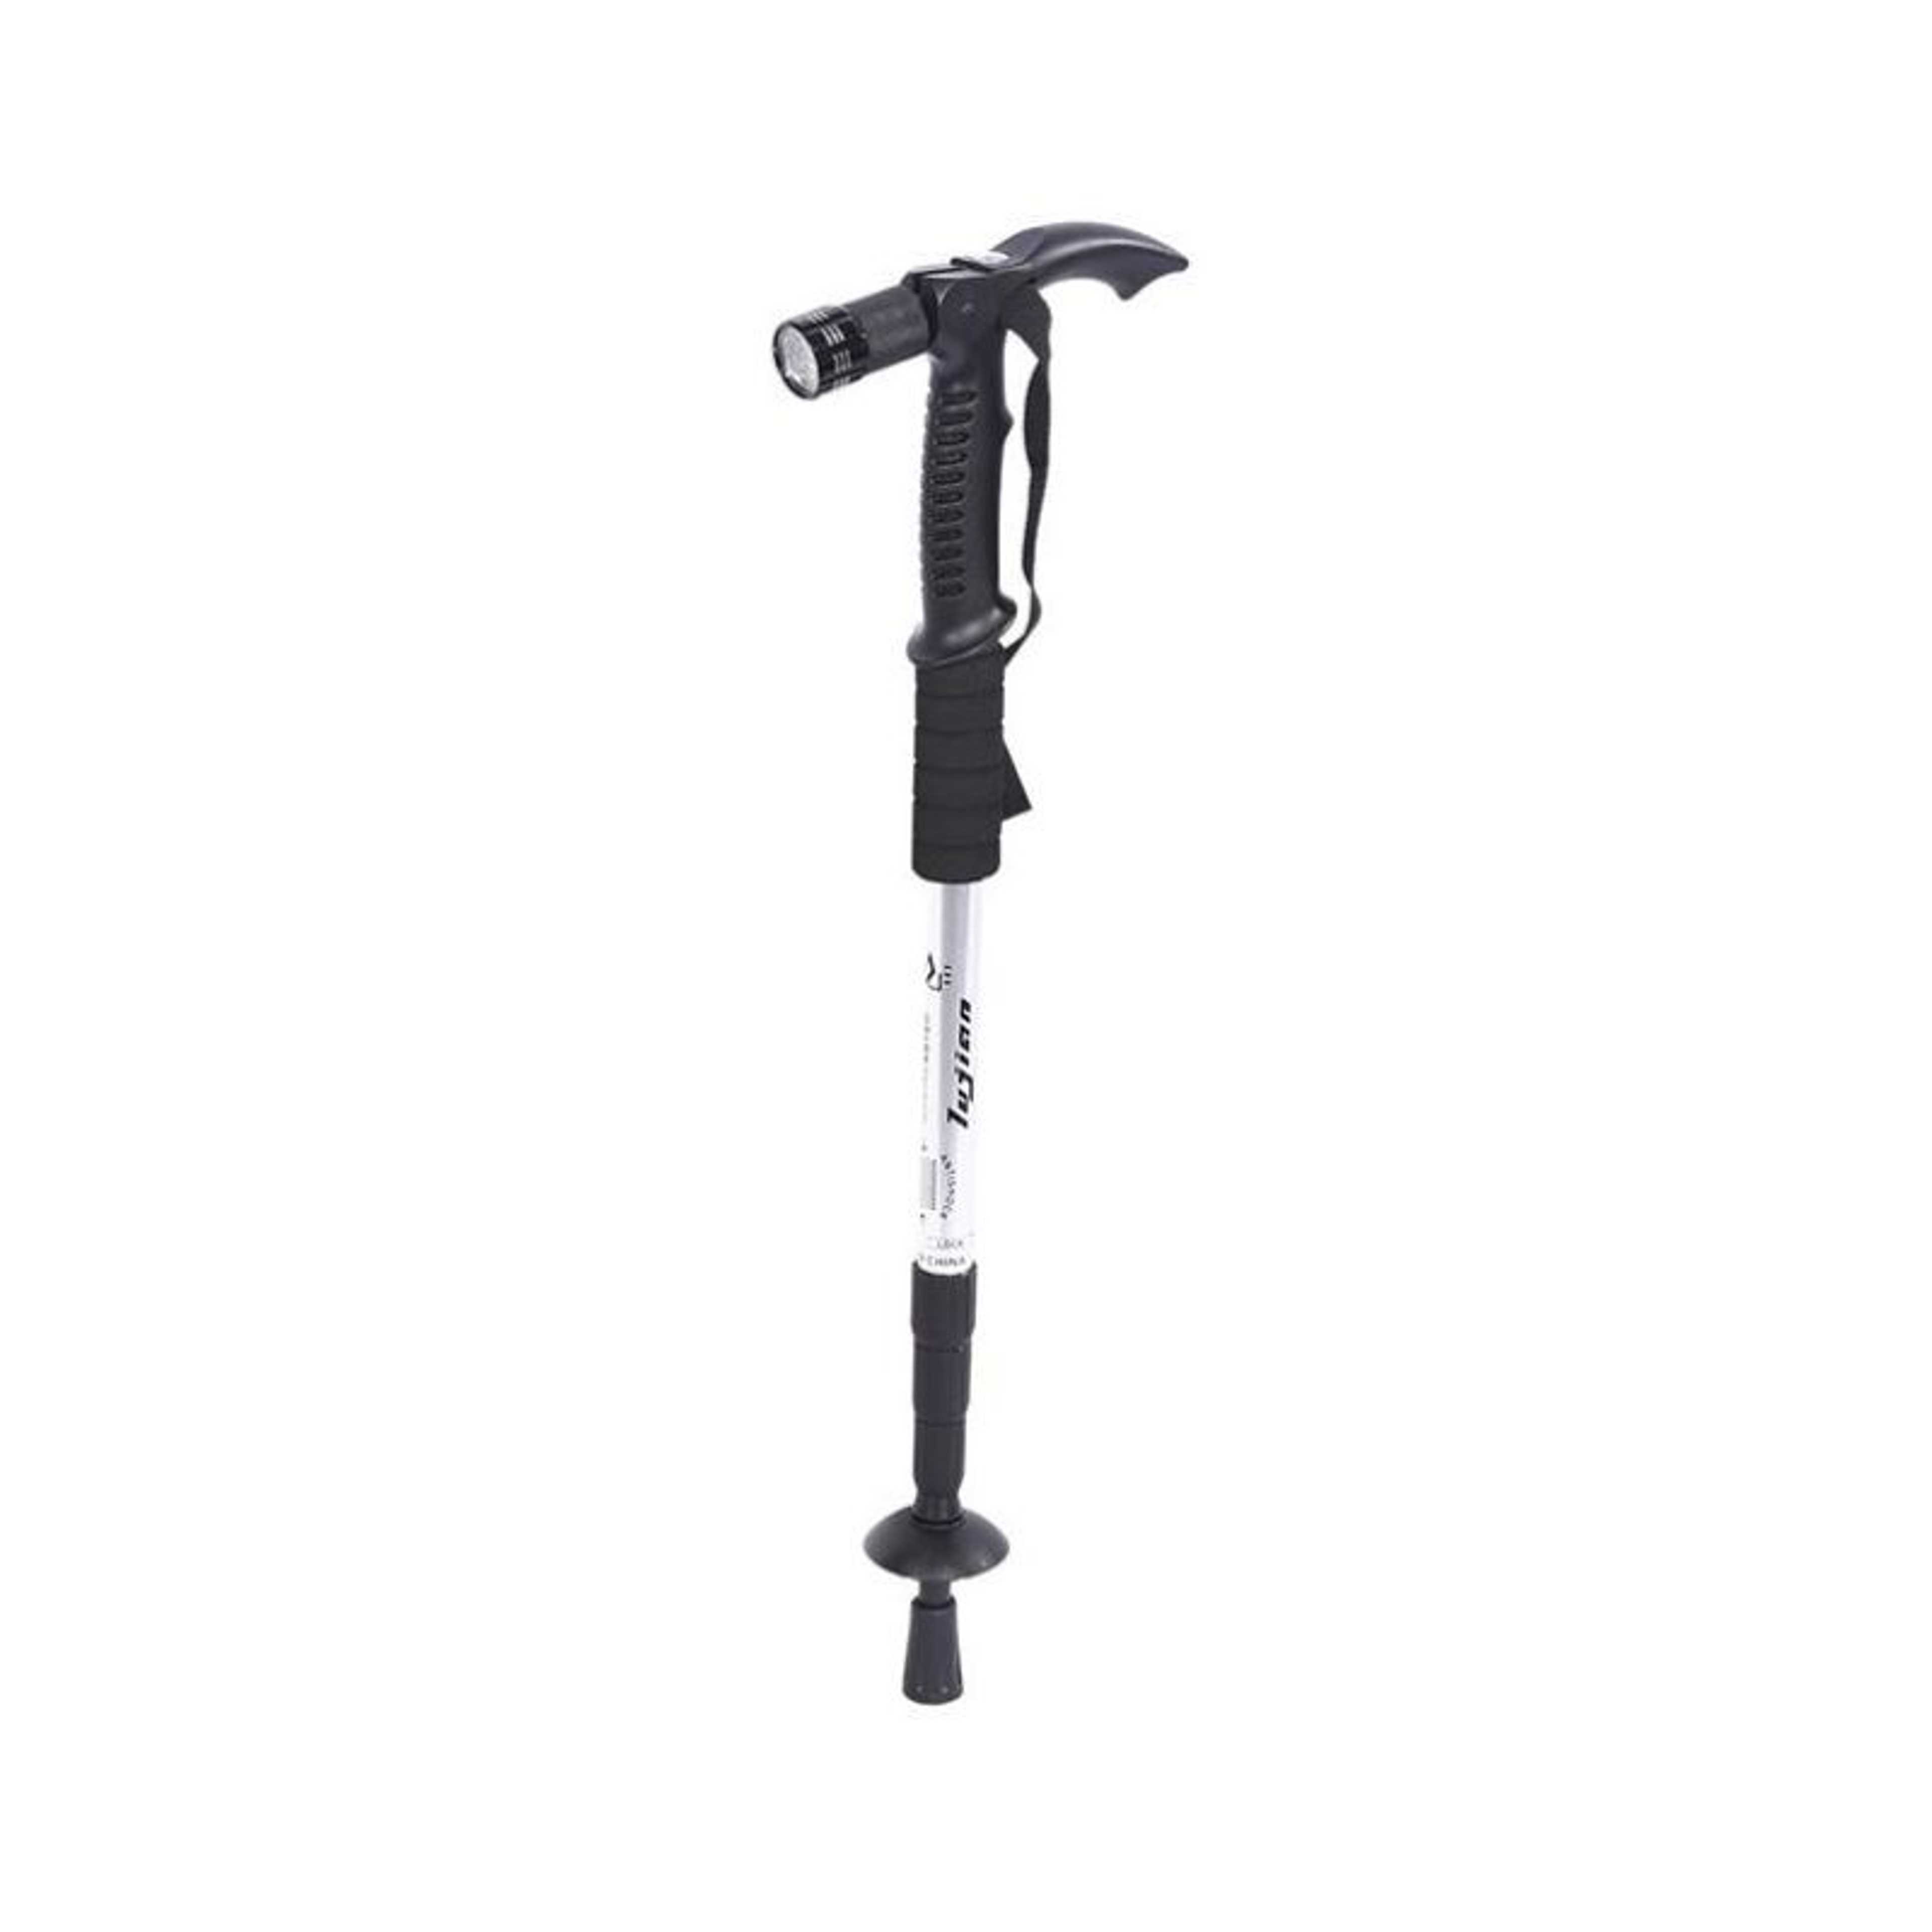 Cane Telescopic Walking-Stick Adjustable Trekking Hiking Pole with led Light for Old Man-Ivory White